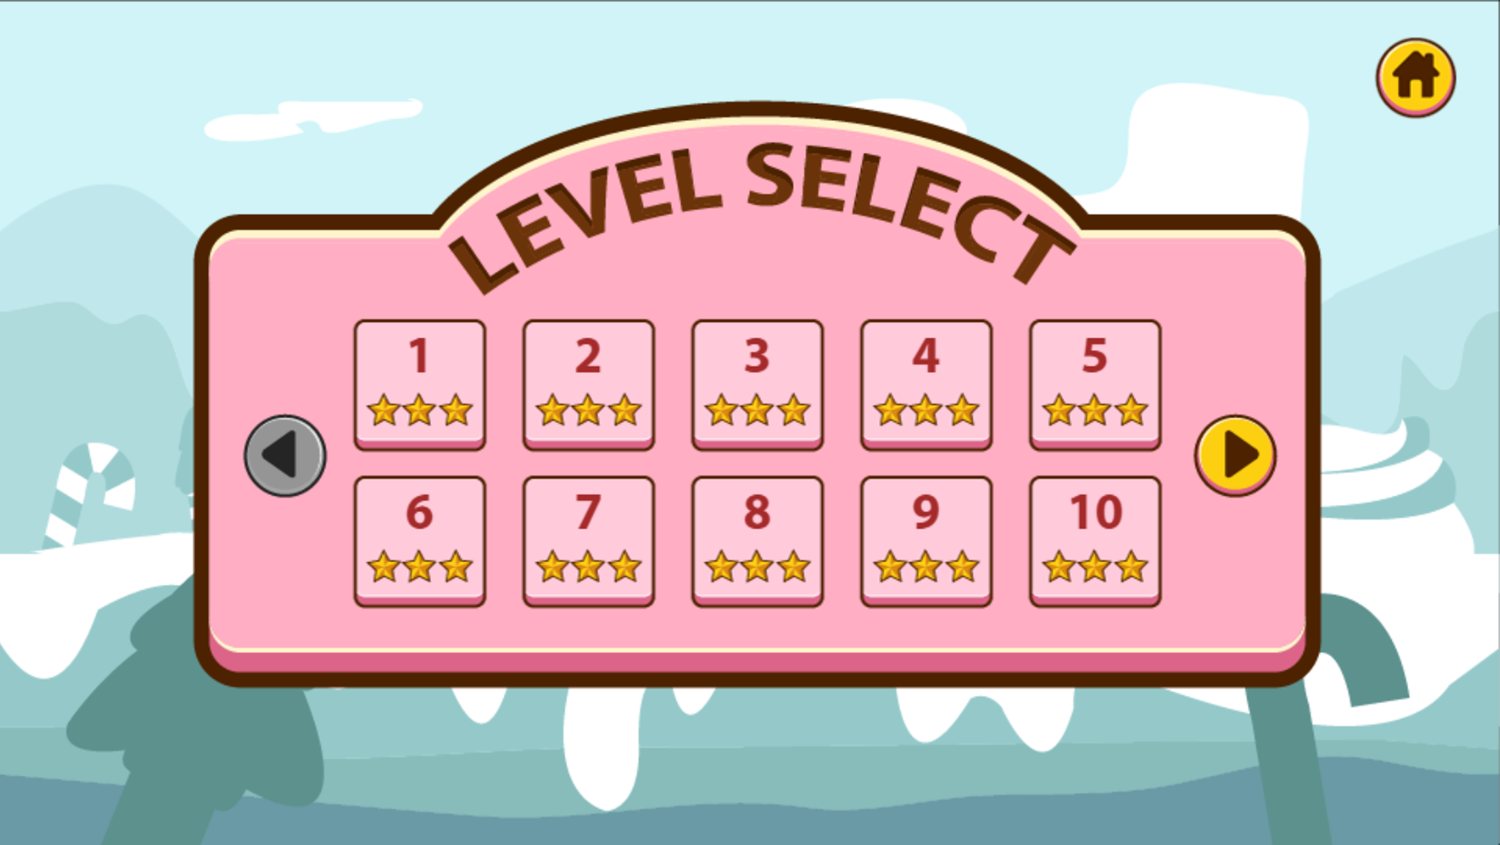 My Sweet Adventure Game Level Select Screen Screenshot.